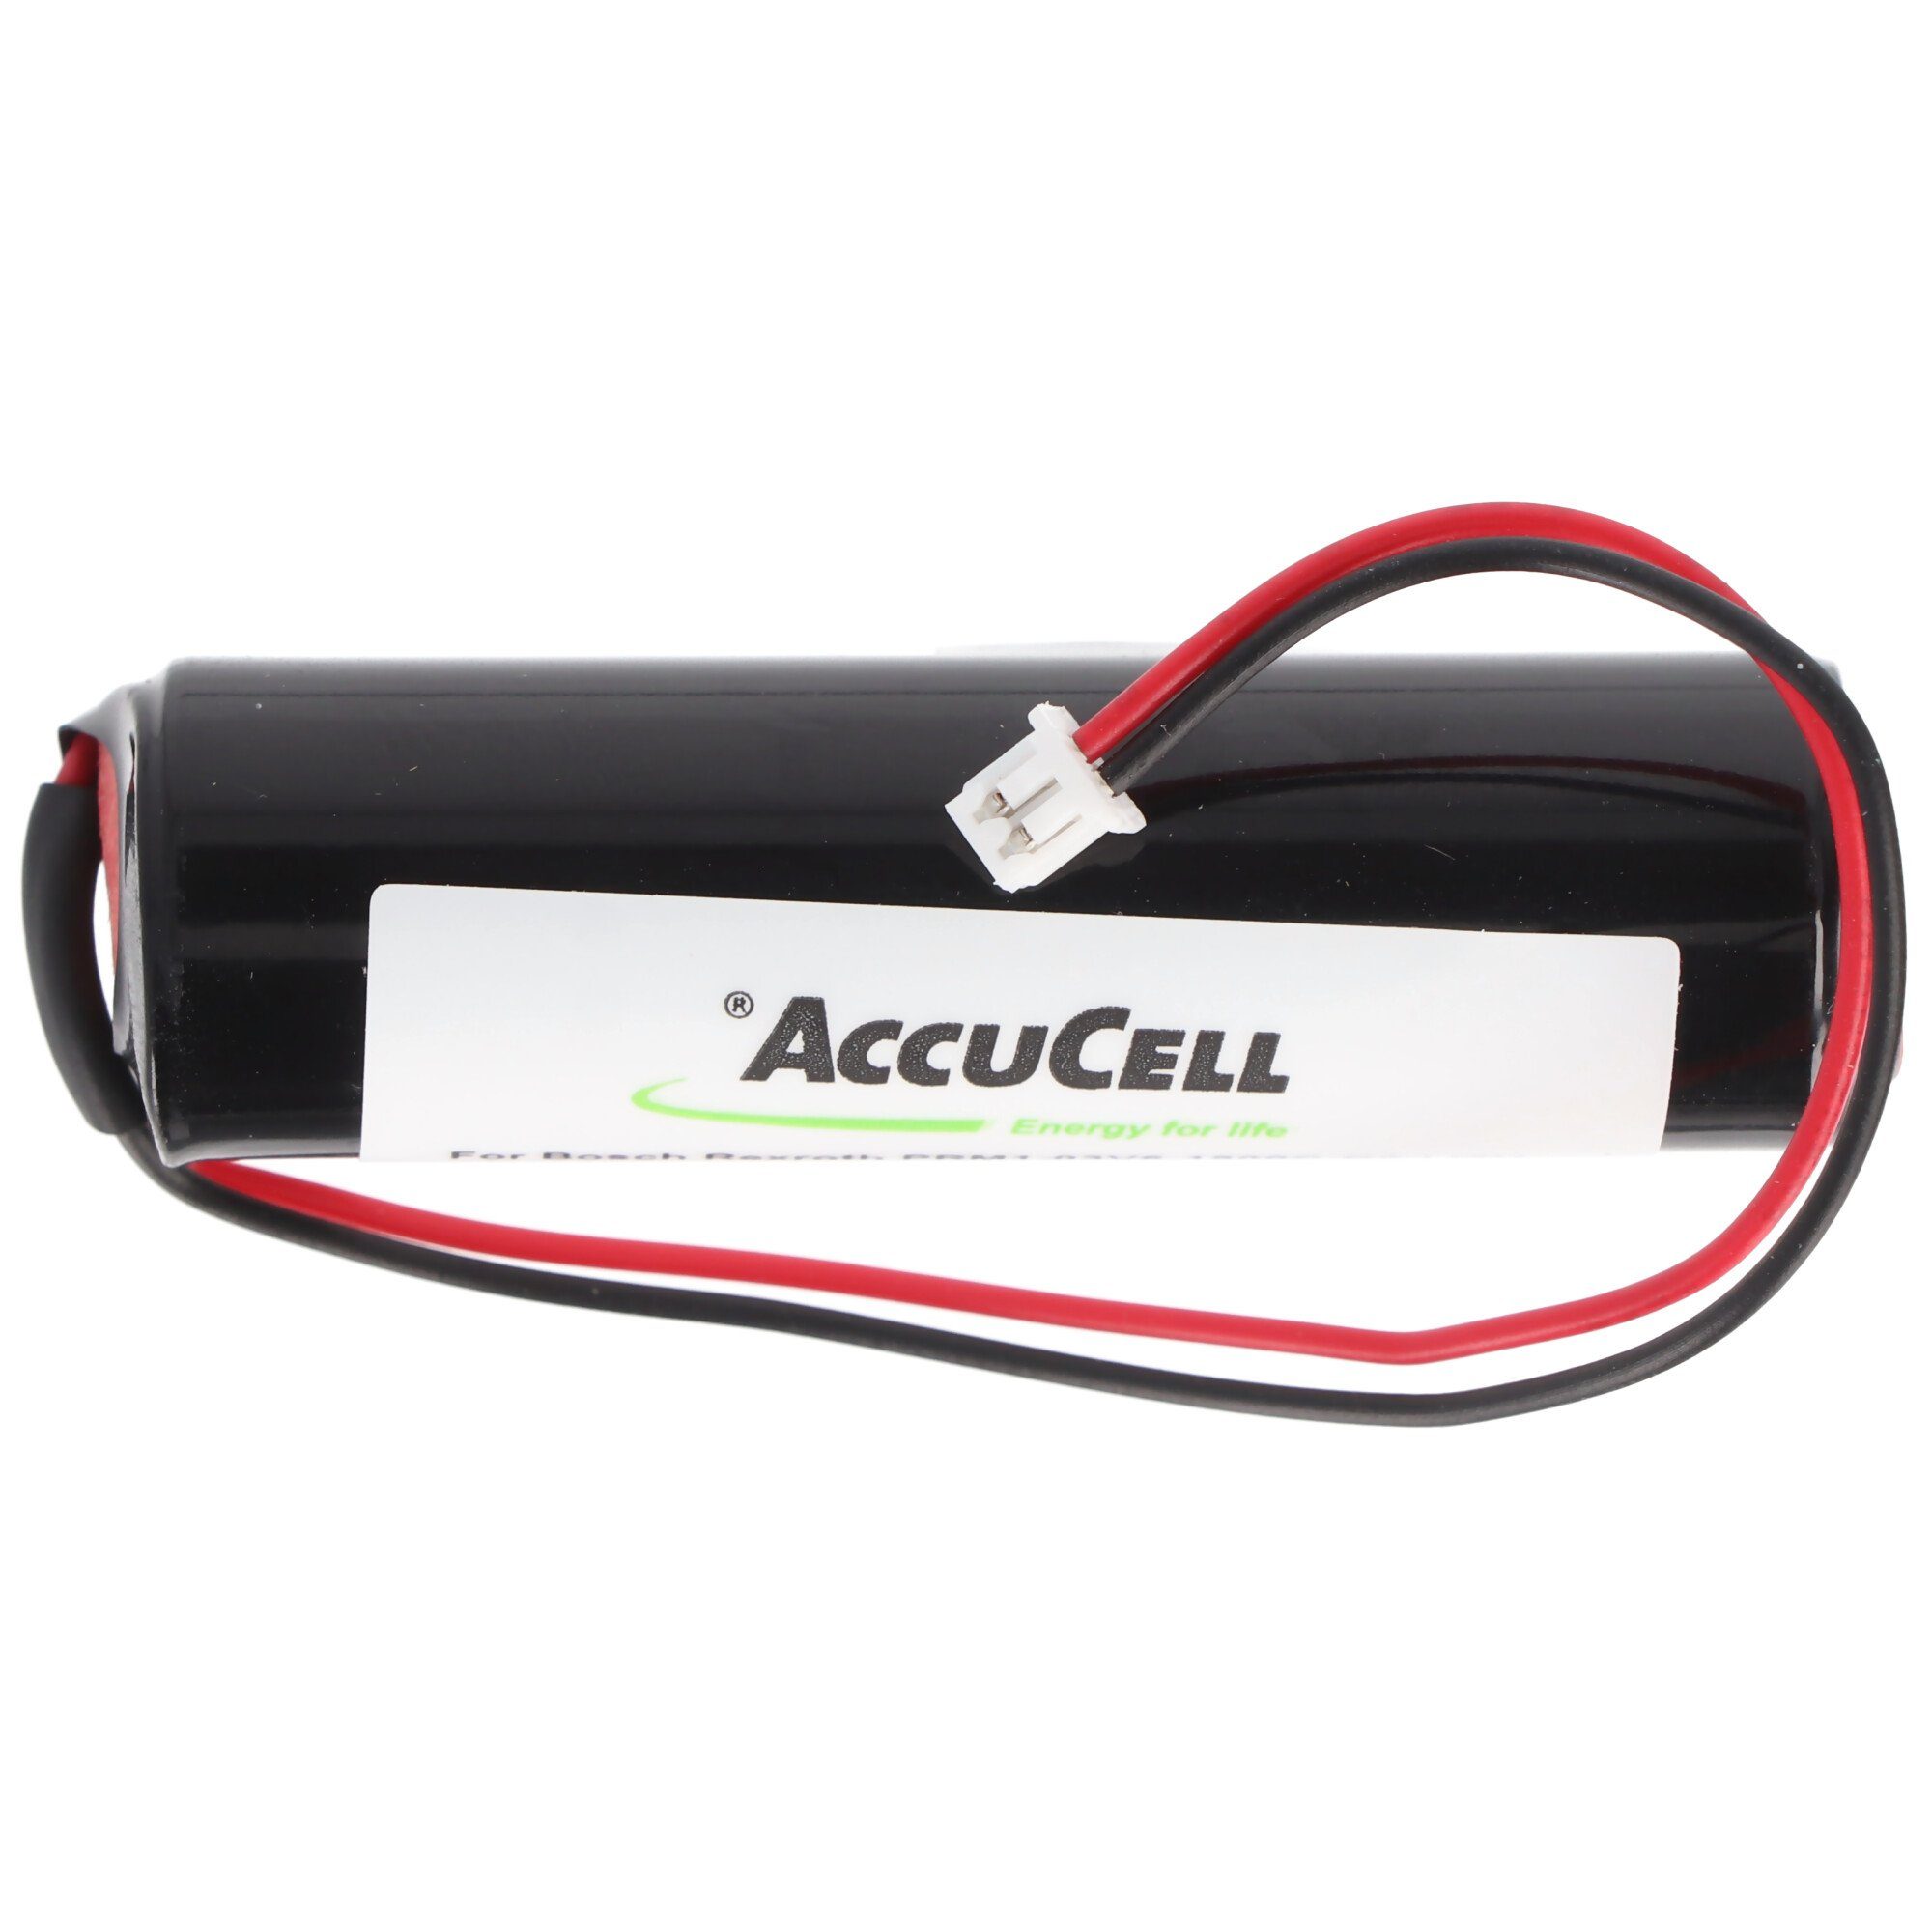 AccuCell Speicherbatterie 3,6V ersetzt Bosch Rexroth PRM1-03V6-1800C-D2-LITH - Batterie, (3,6 V)